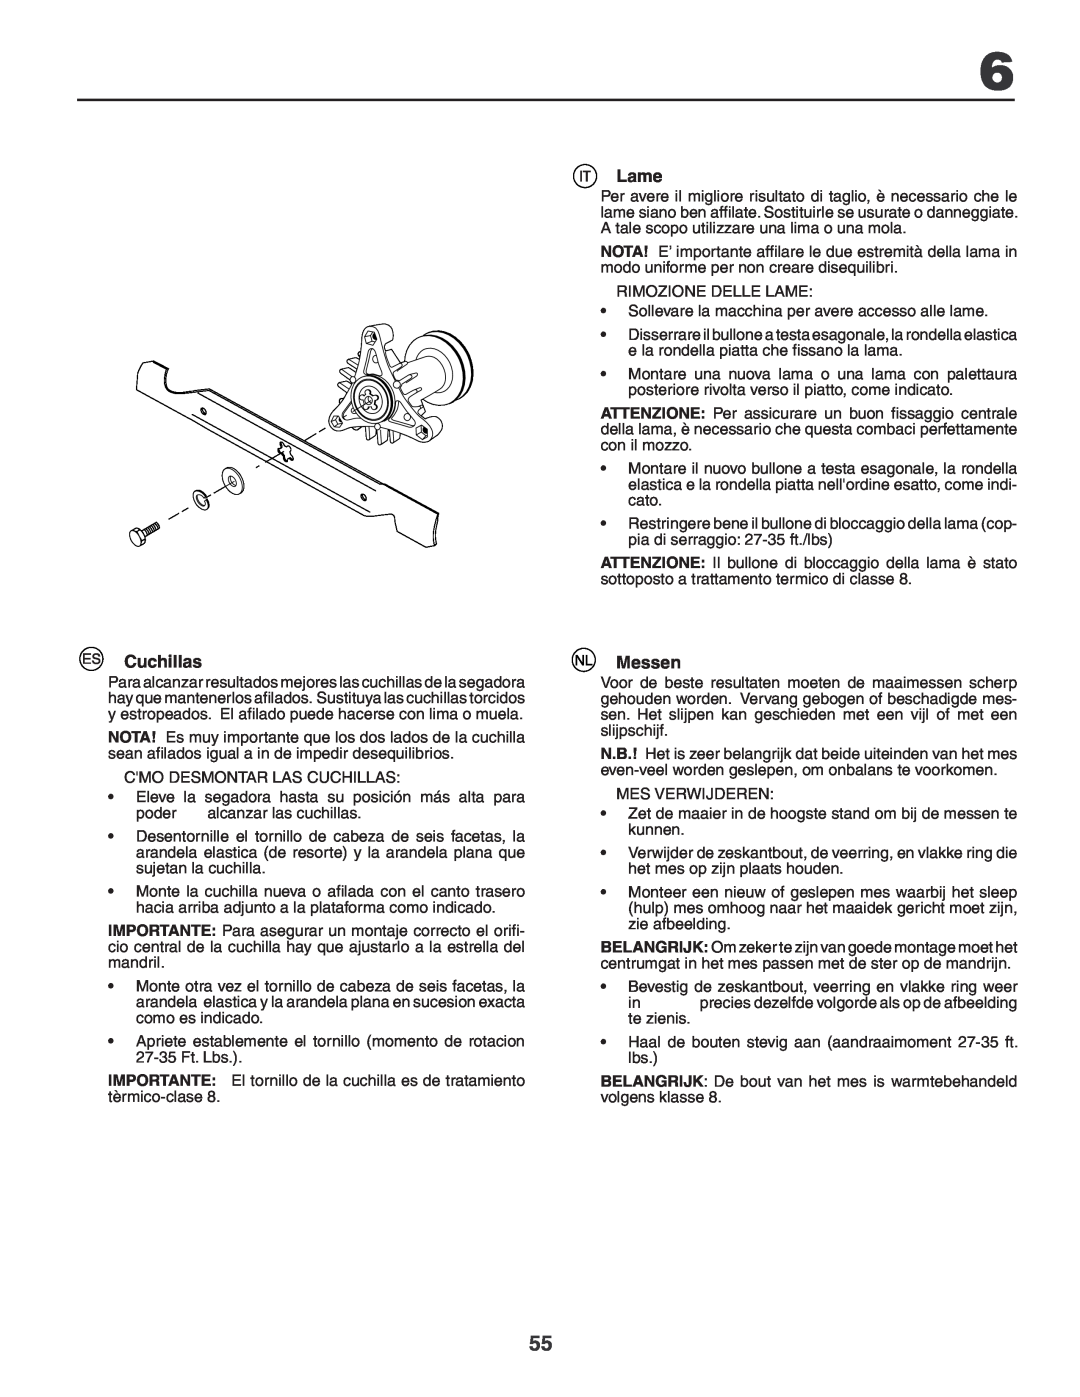 Husqvarna YTH180XP instruction manual Cuchillas, Lame, Messen 